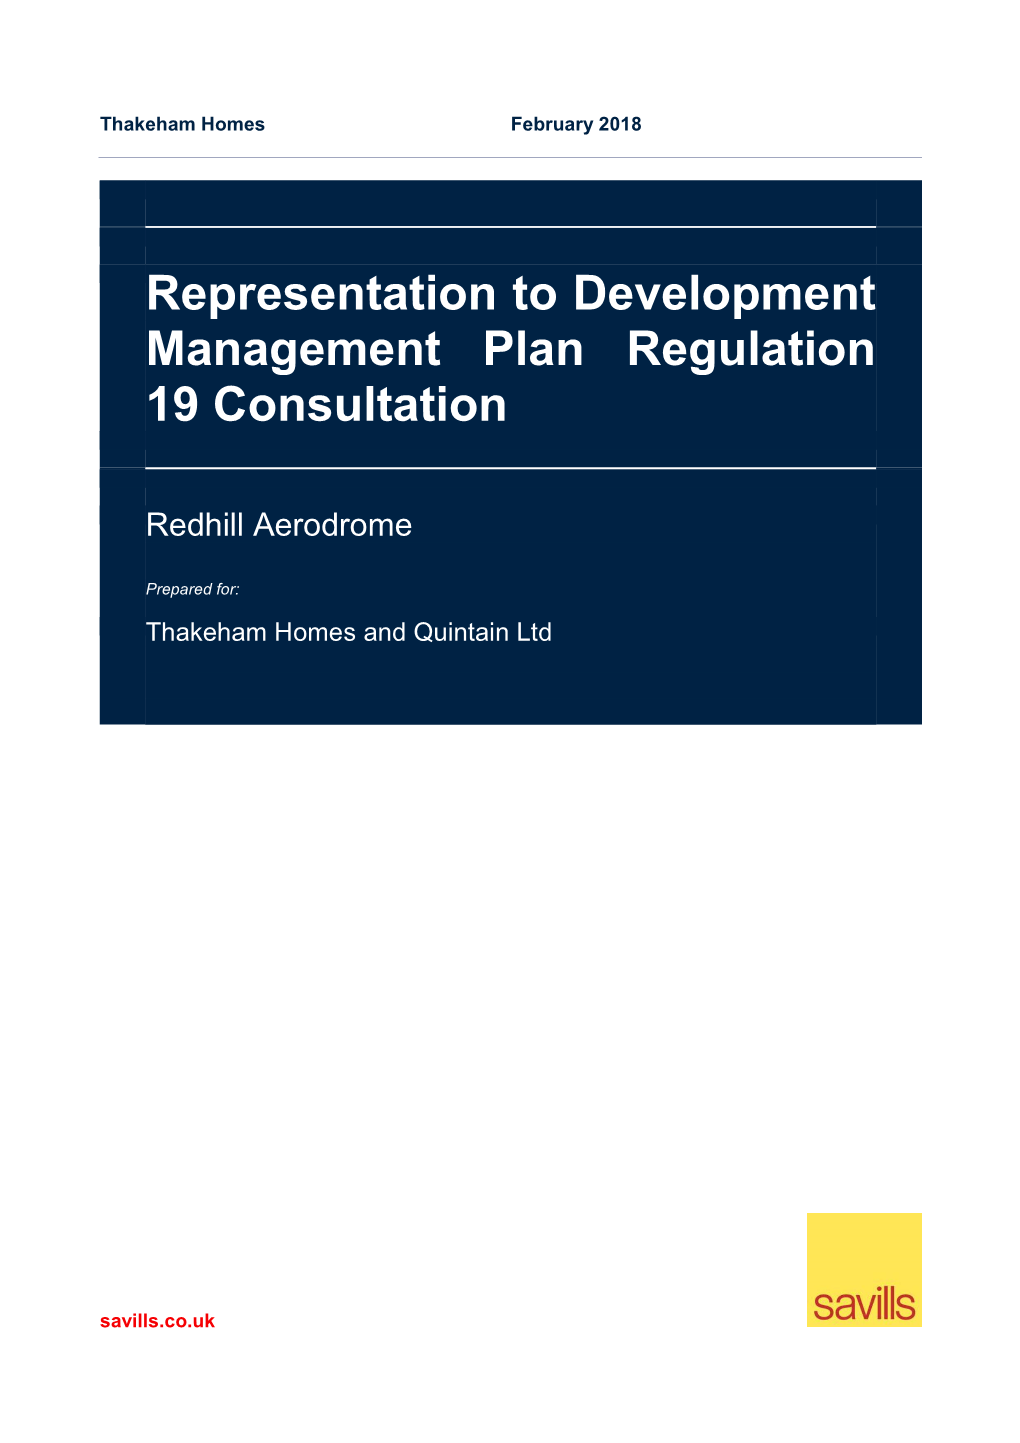 Representation to Development Management Plan Regulation 19 Consultation